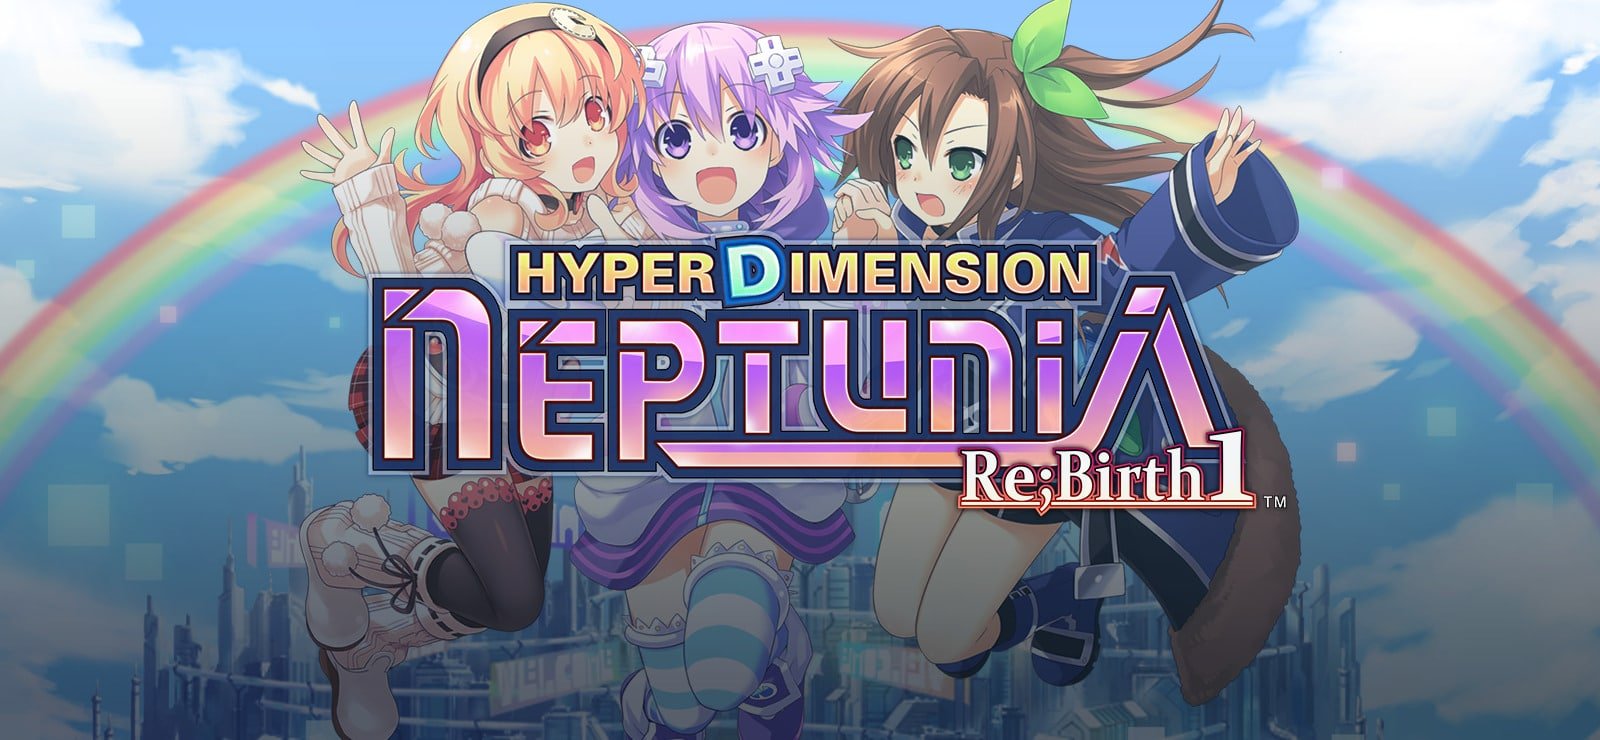 La Trilogie Hyperdimension Neptunia Re;Birth sortira bien en Europe, sur Nintendo Switch